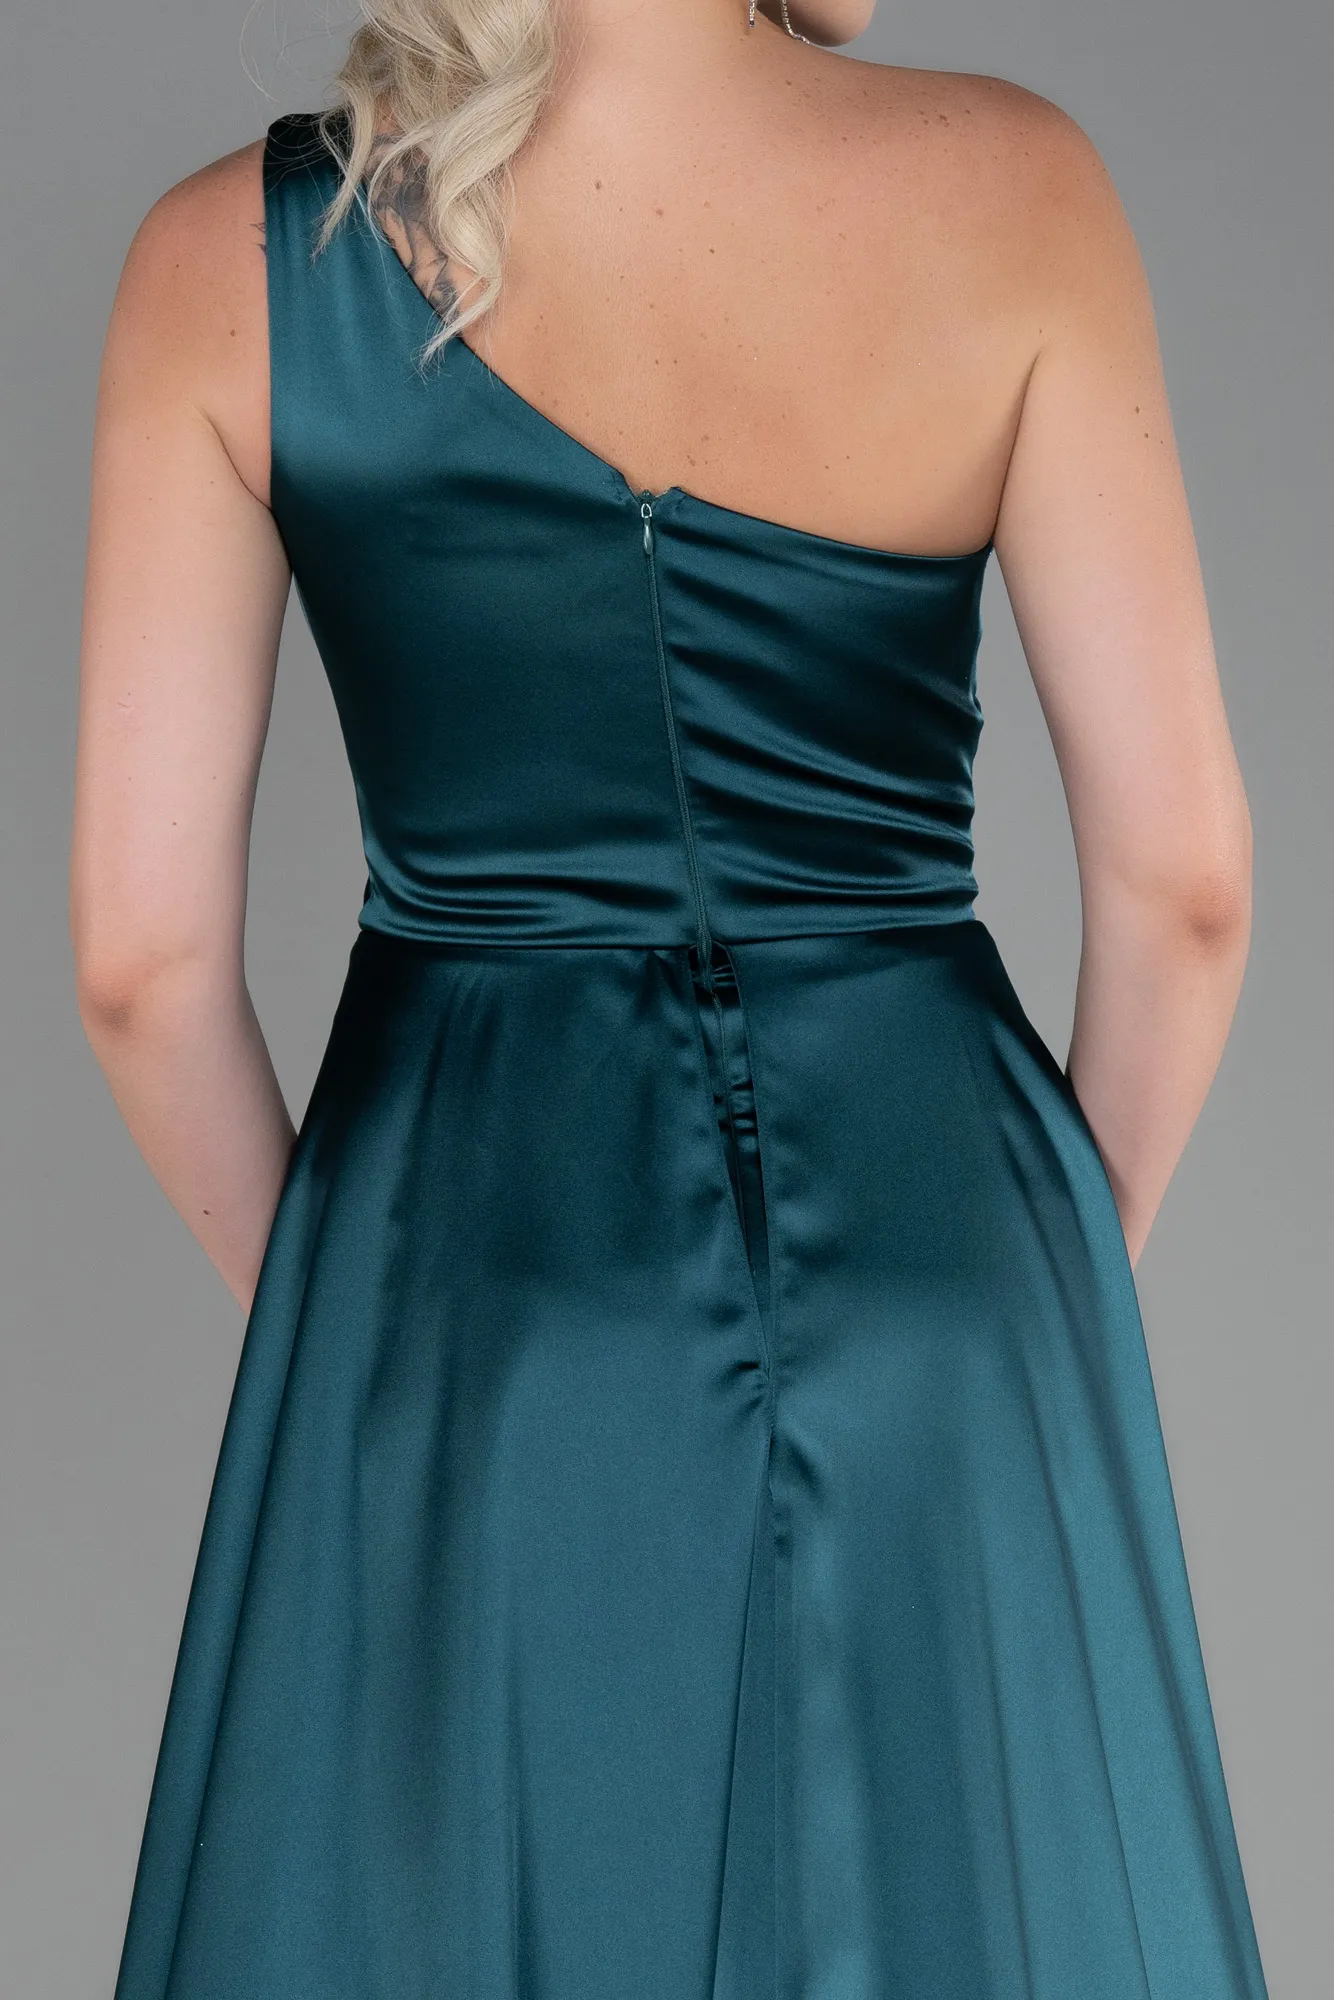 Emerald Green-Long Satin Evening Dress ABU2933